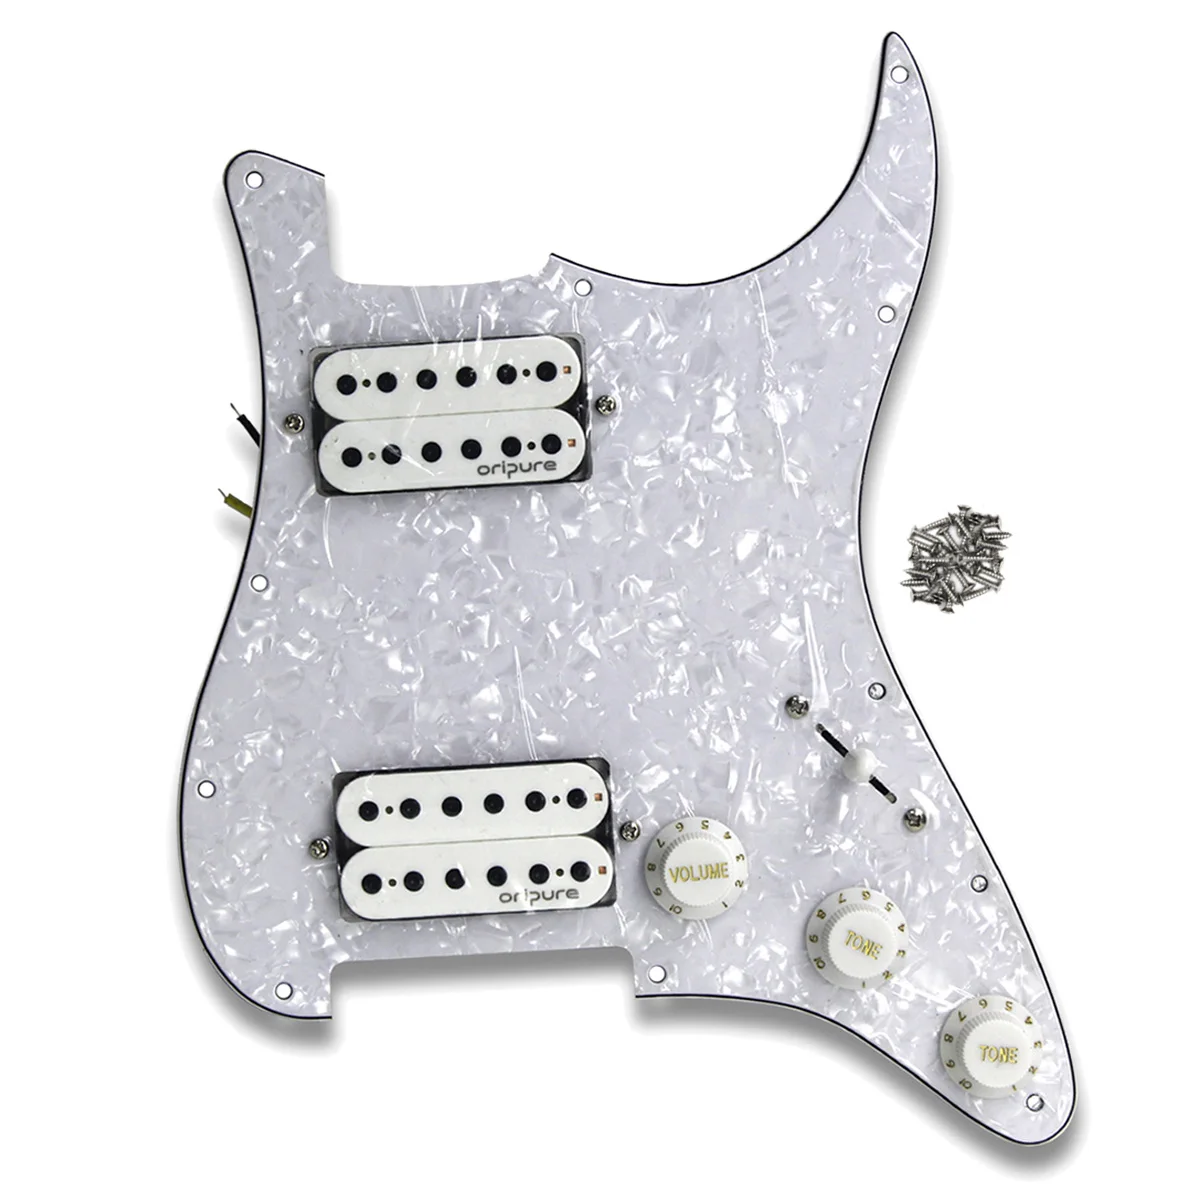 OriPure HH загруженный Pickguard Prewired хамбакер Пикап Alnico 5 набор в сборе белый жемчуг гитары запчасти